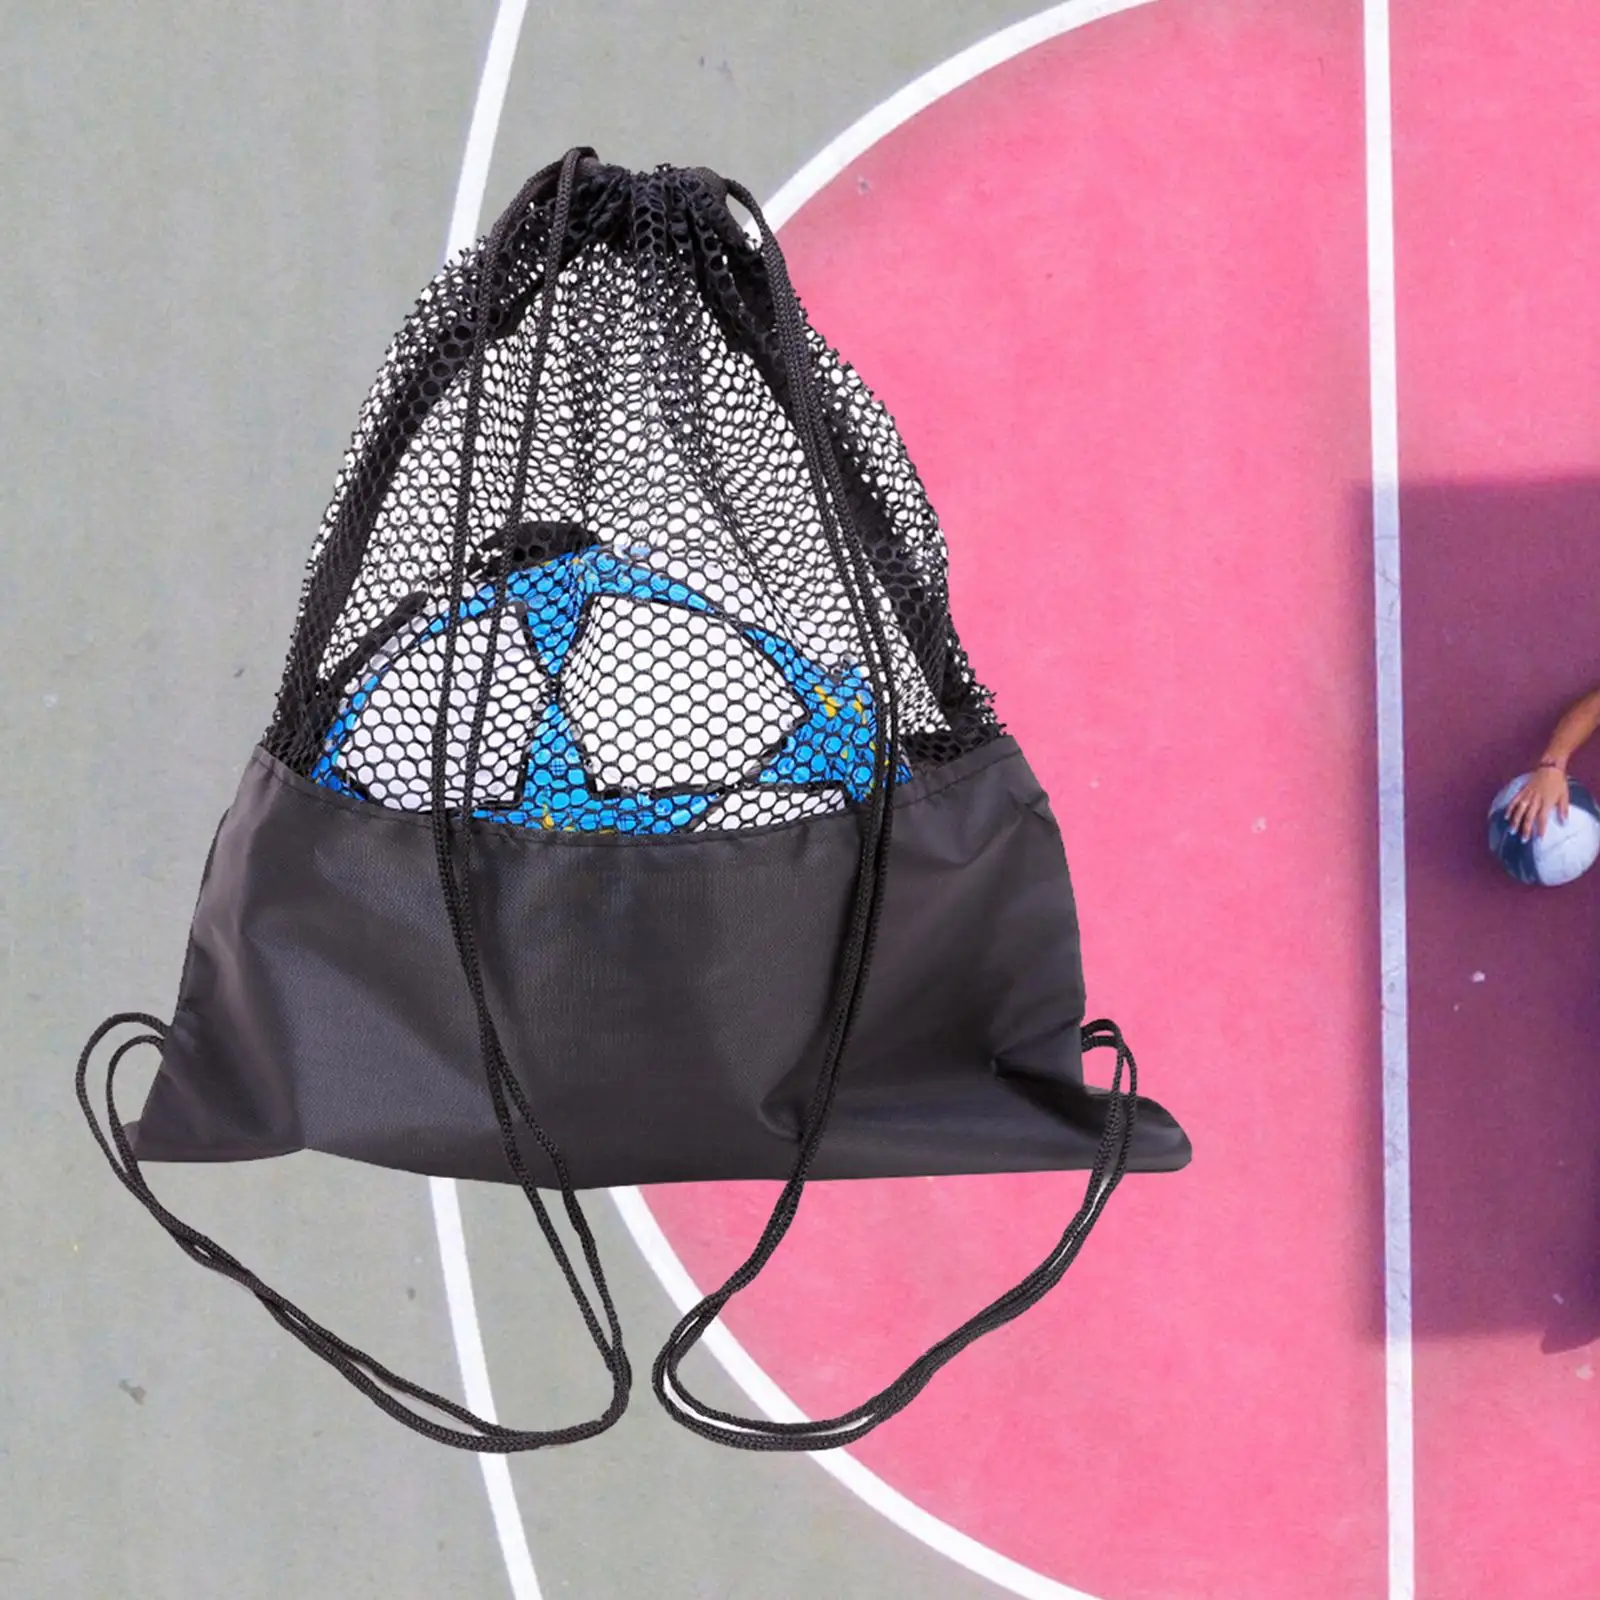 Drawstring Backpack Day Pack Handbag Gym Wear Resistant Basketball Mesh Bag for Football Rugby Softball Traveling Soccer